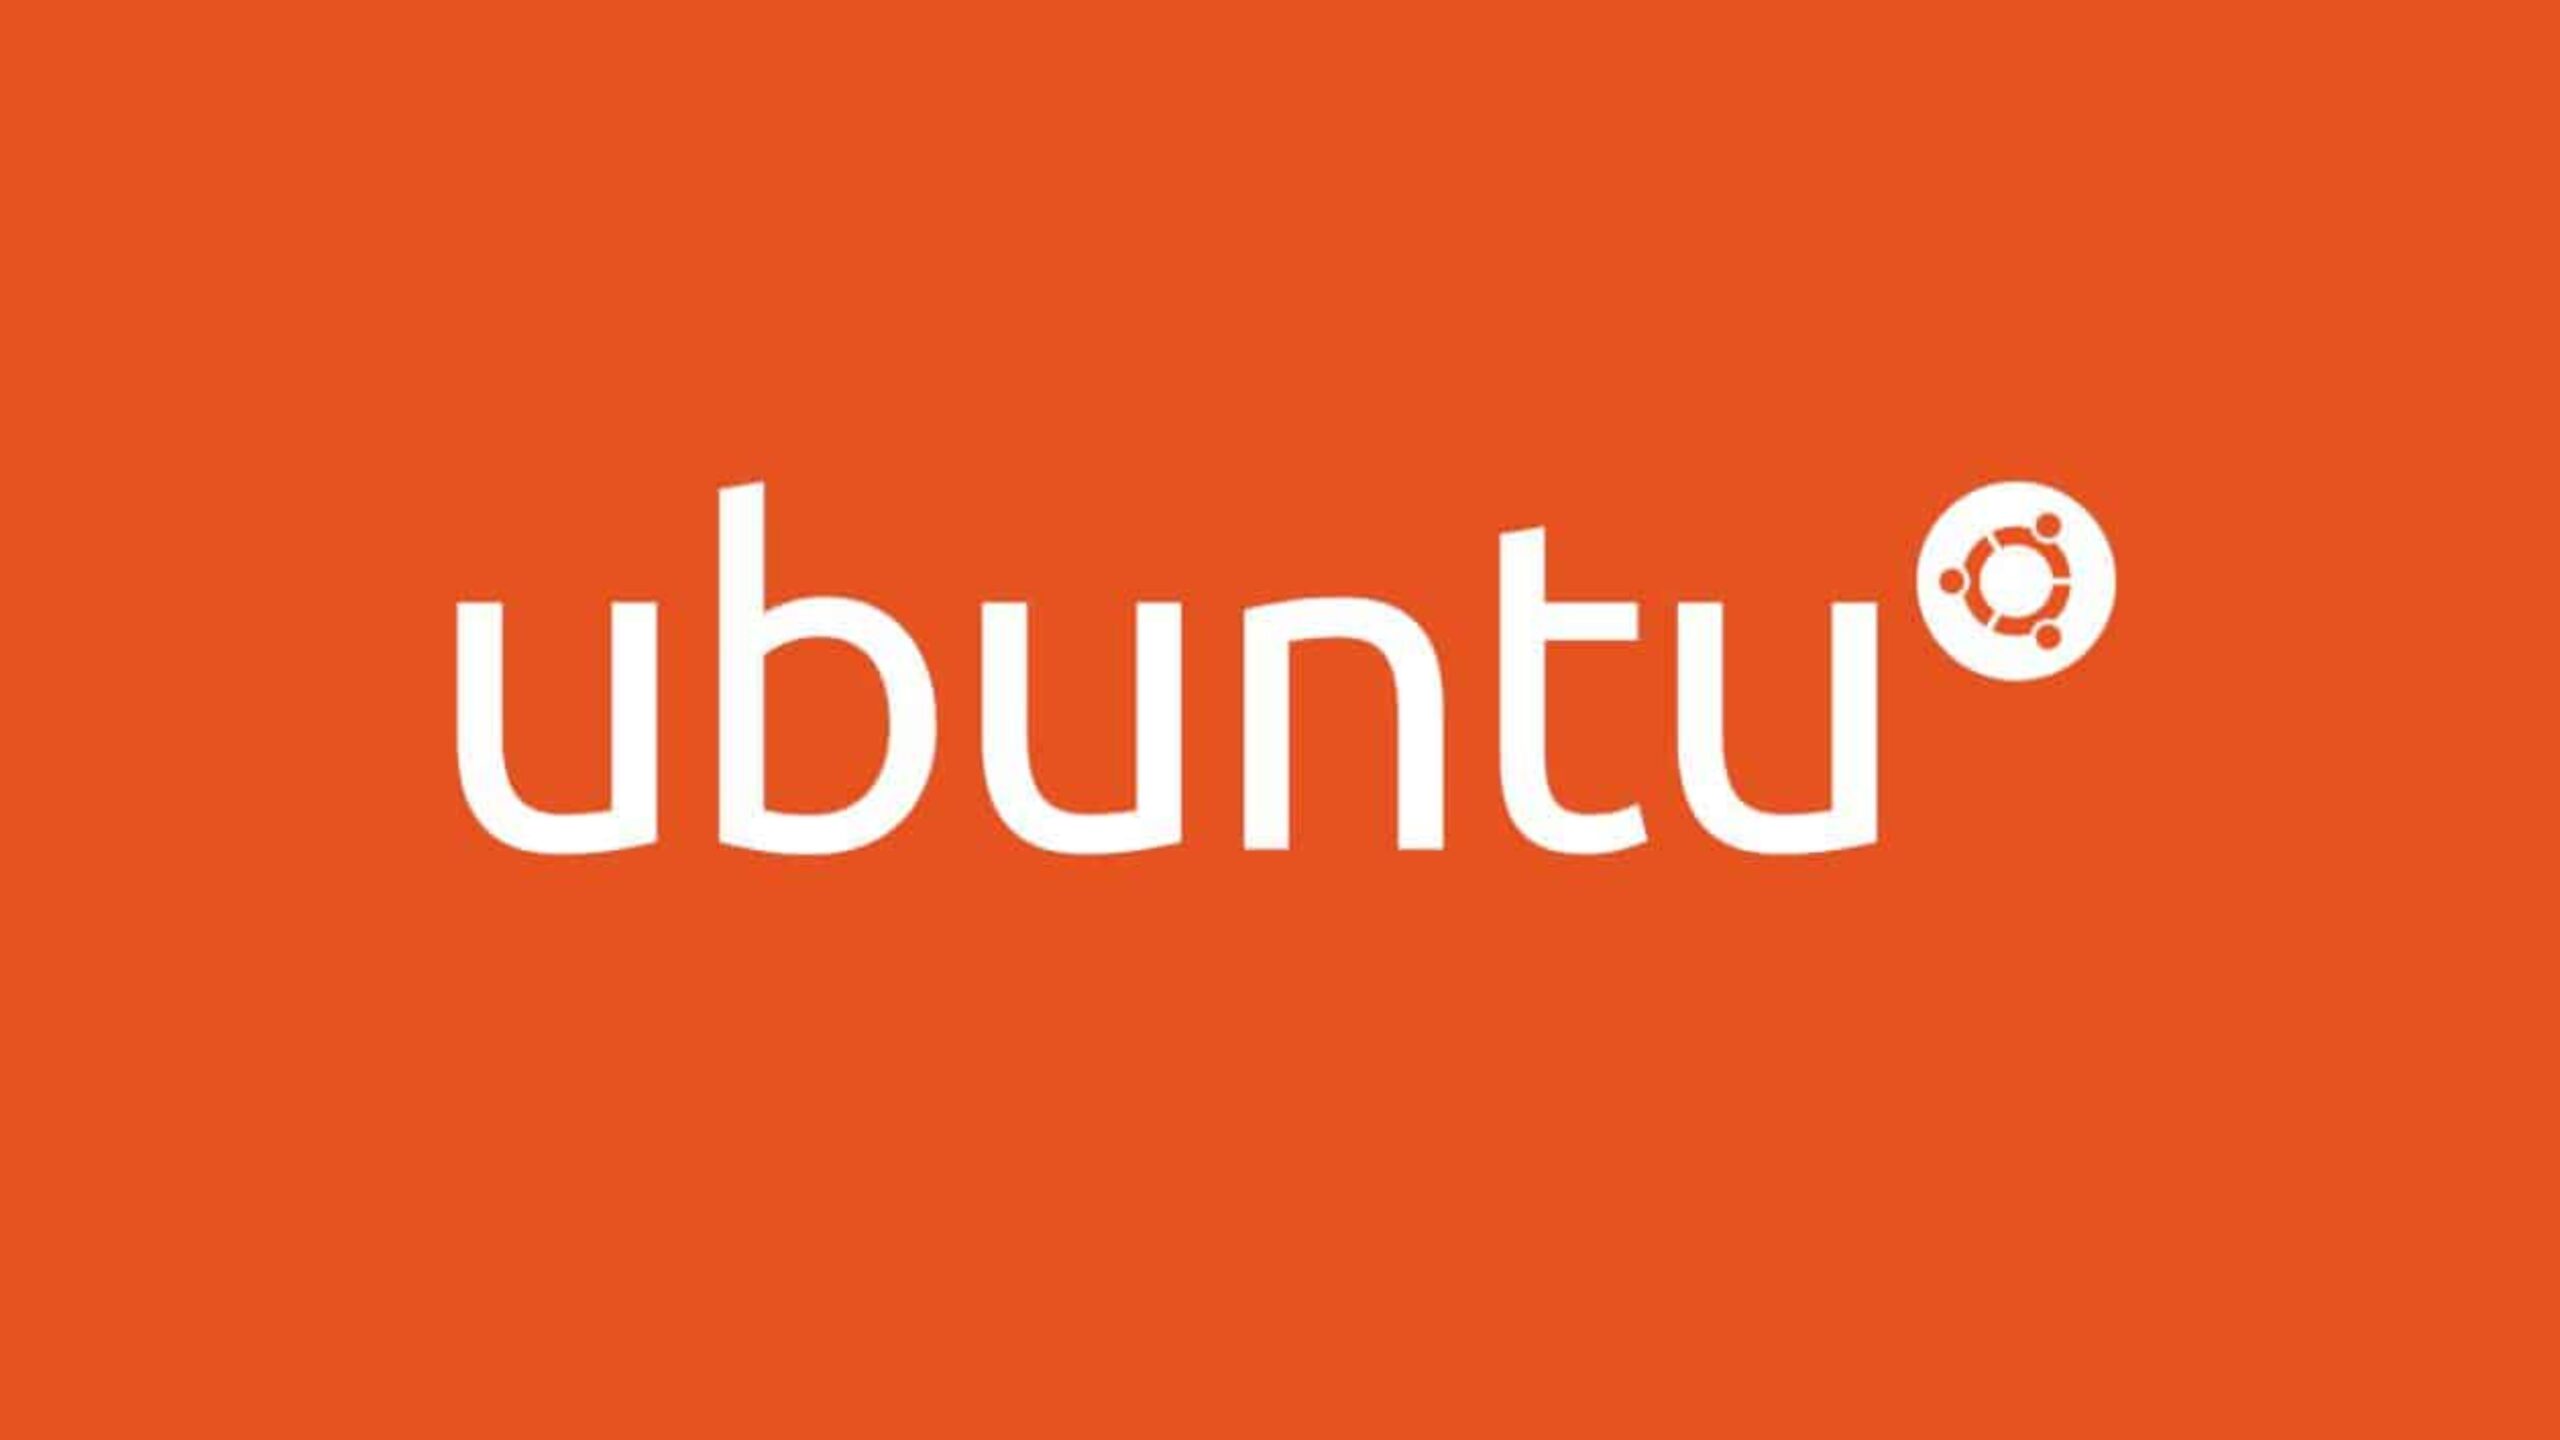 ubuntu-planeja-sistema-desktop-exclusivamente-com-snaps